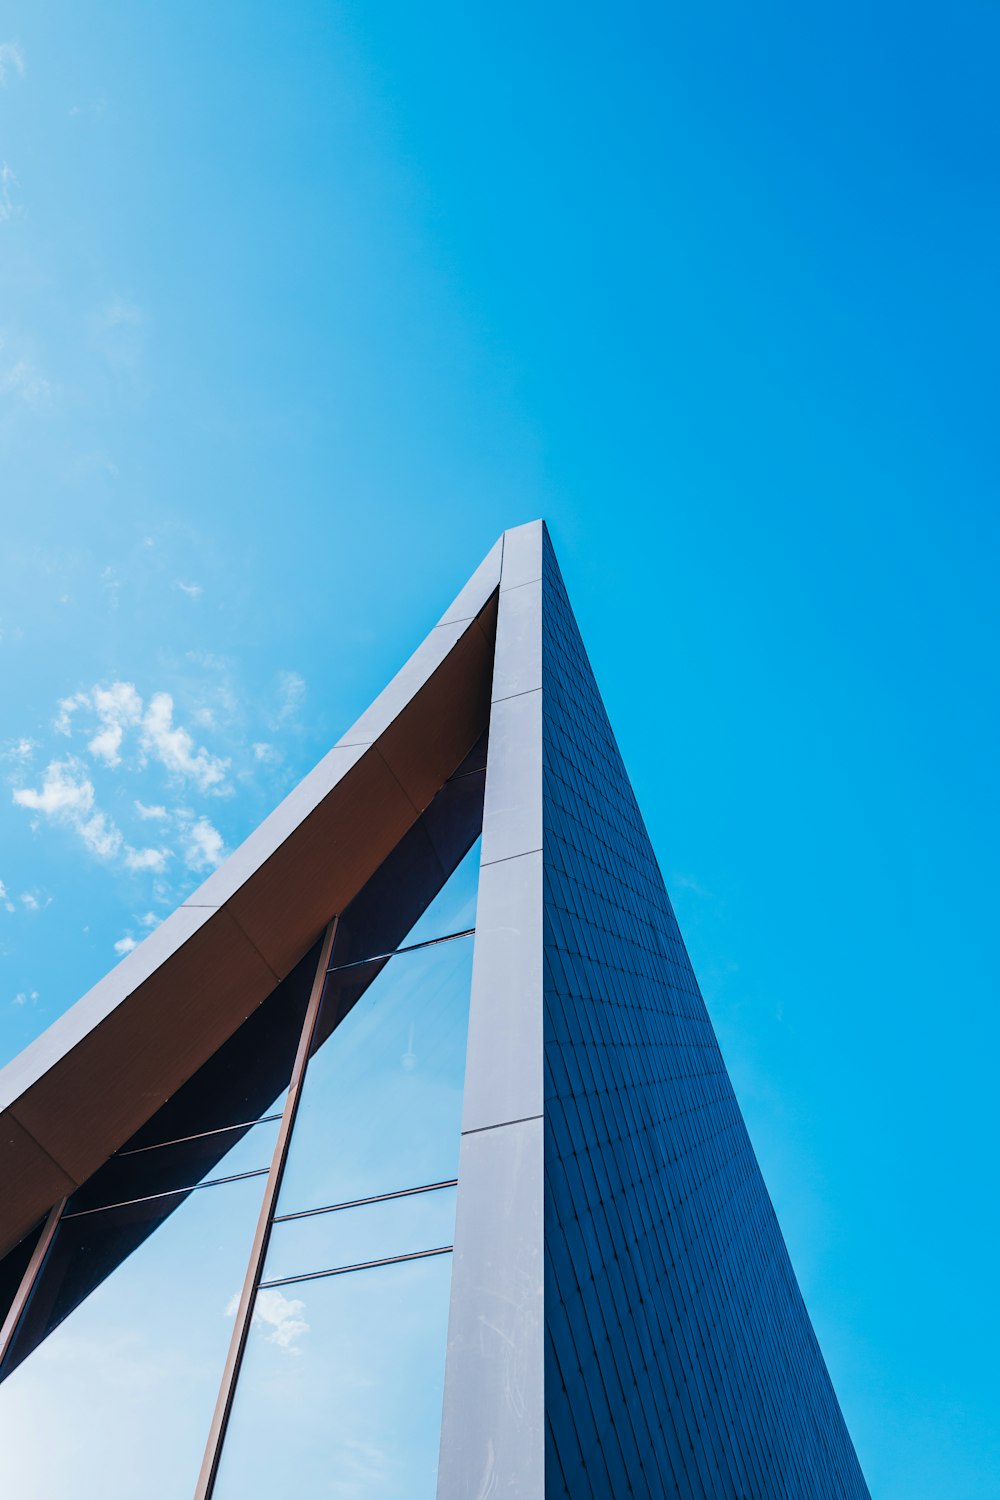 Un edificio alto con un tetto curvo contro un cielo blu